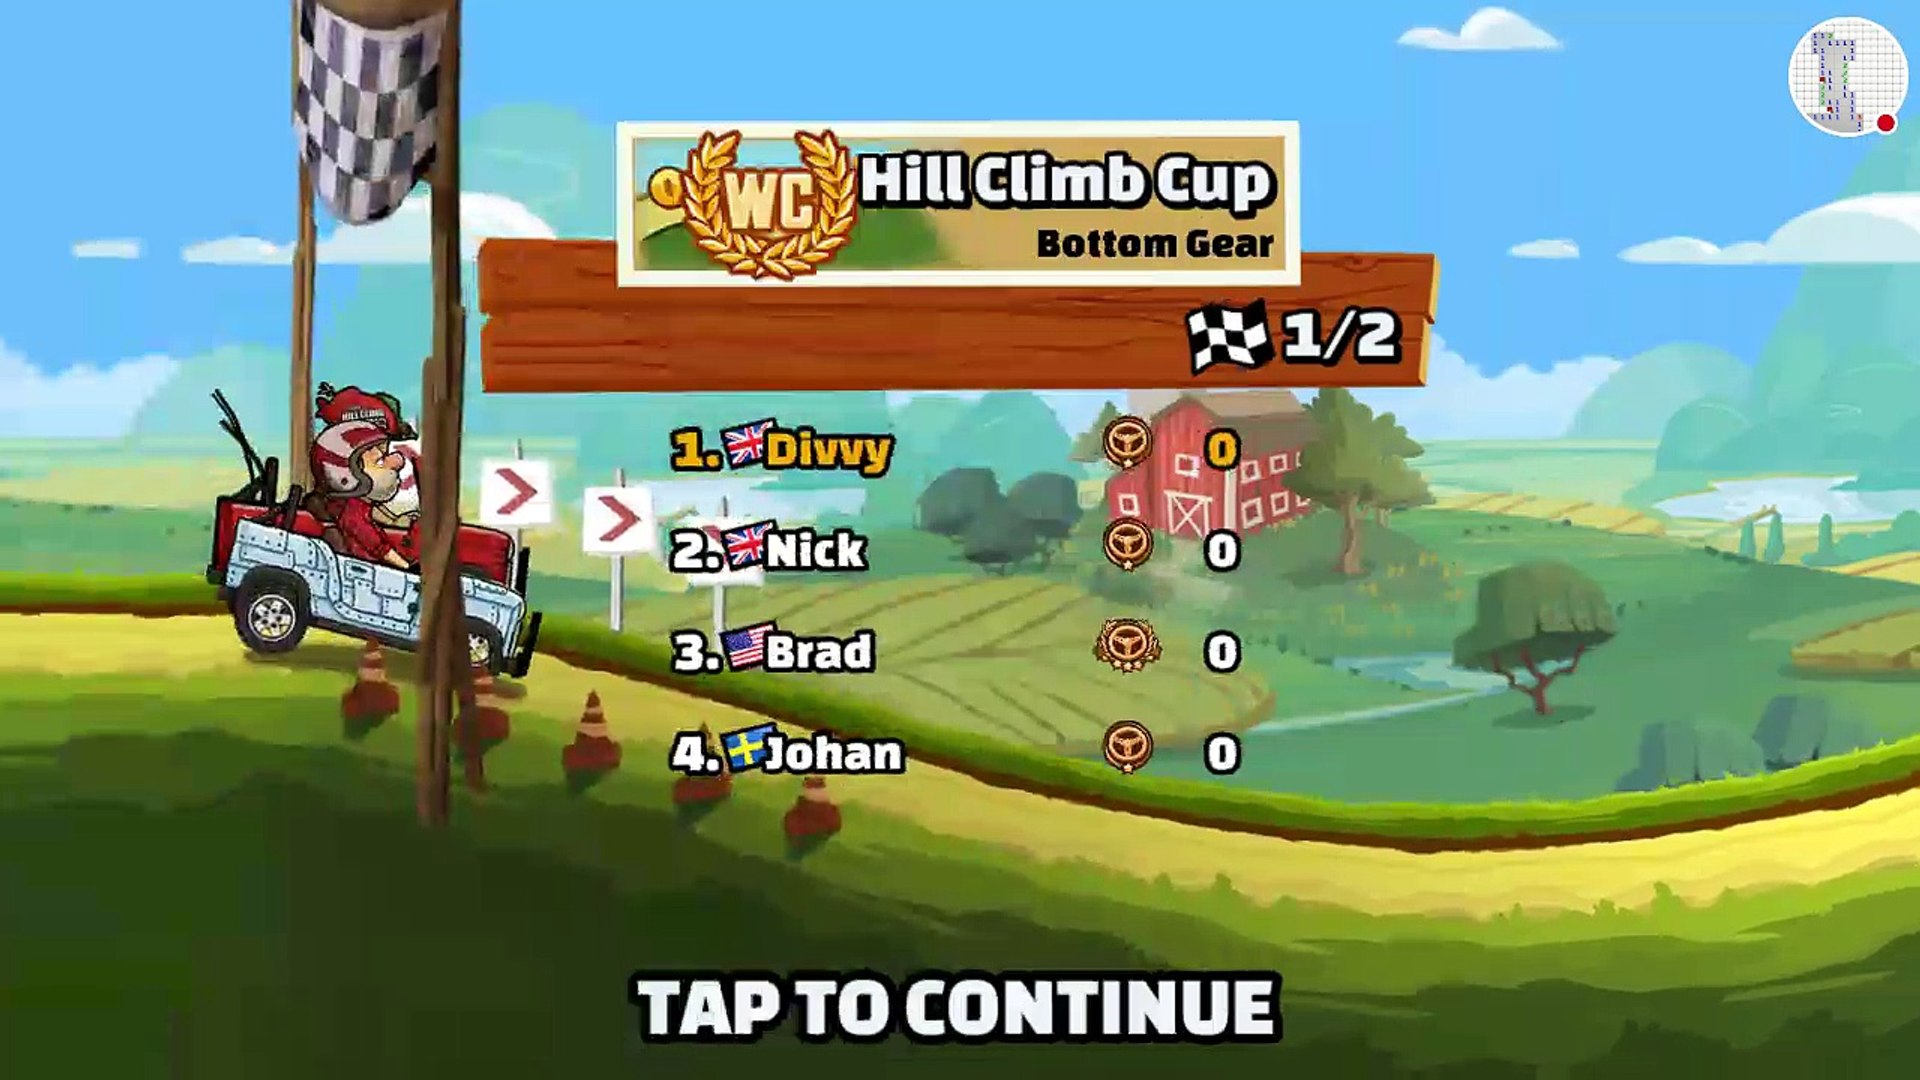 Hill Climb Racing 2 - RACING TRUCK Update GamePlay Walkthrough